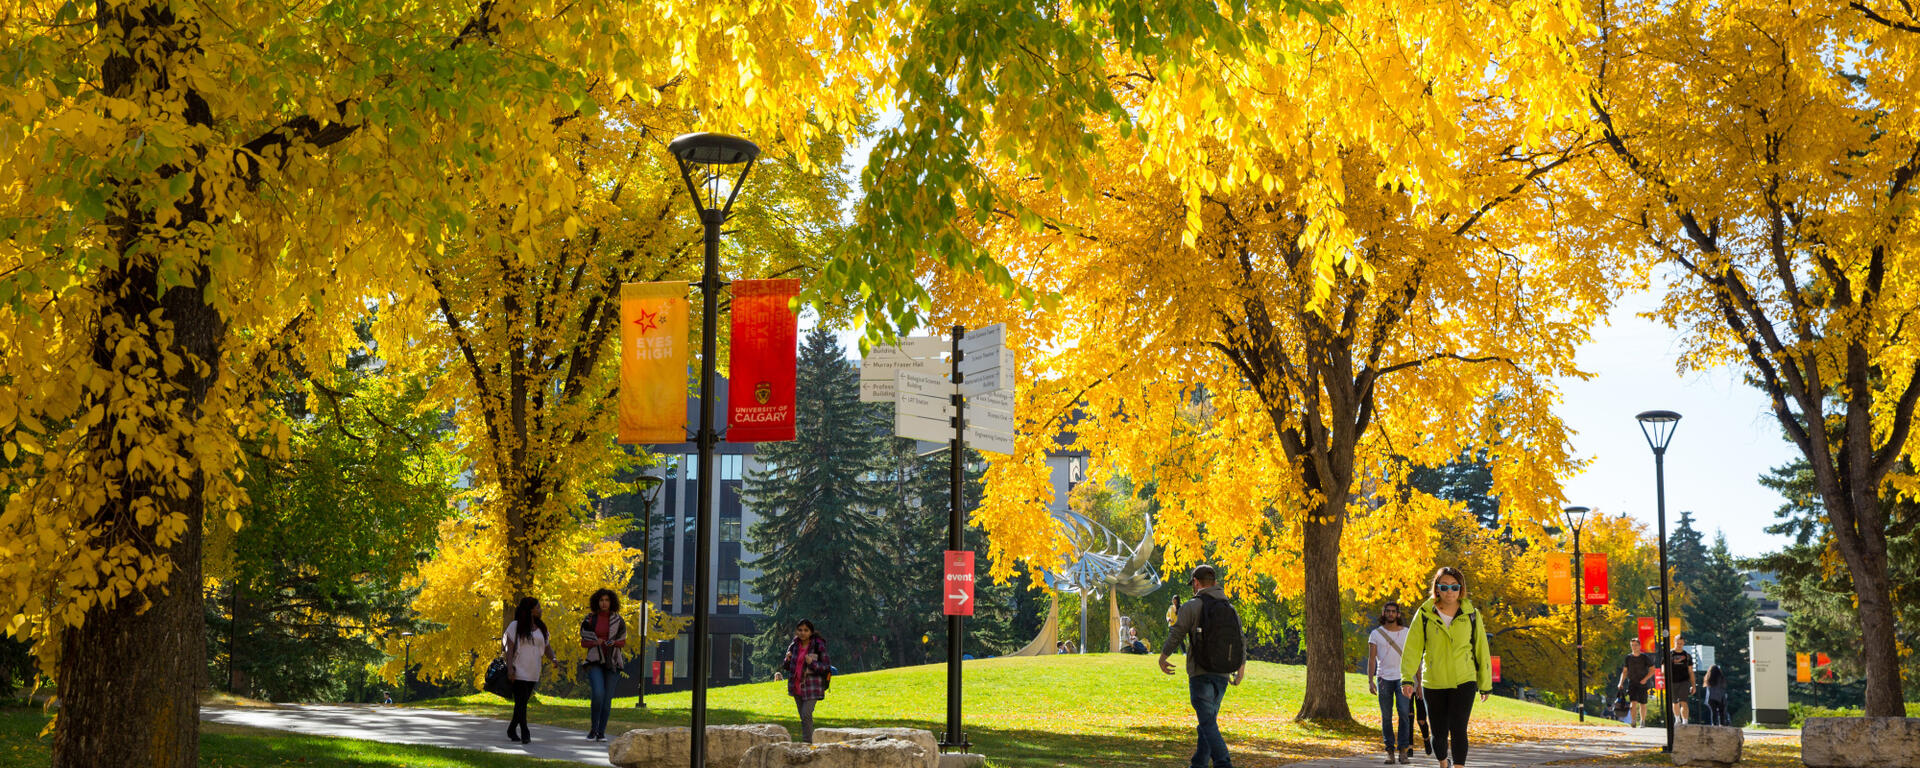 The University of Calgary campus